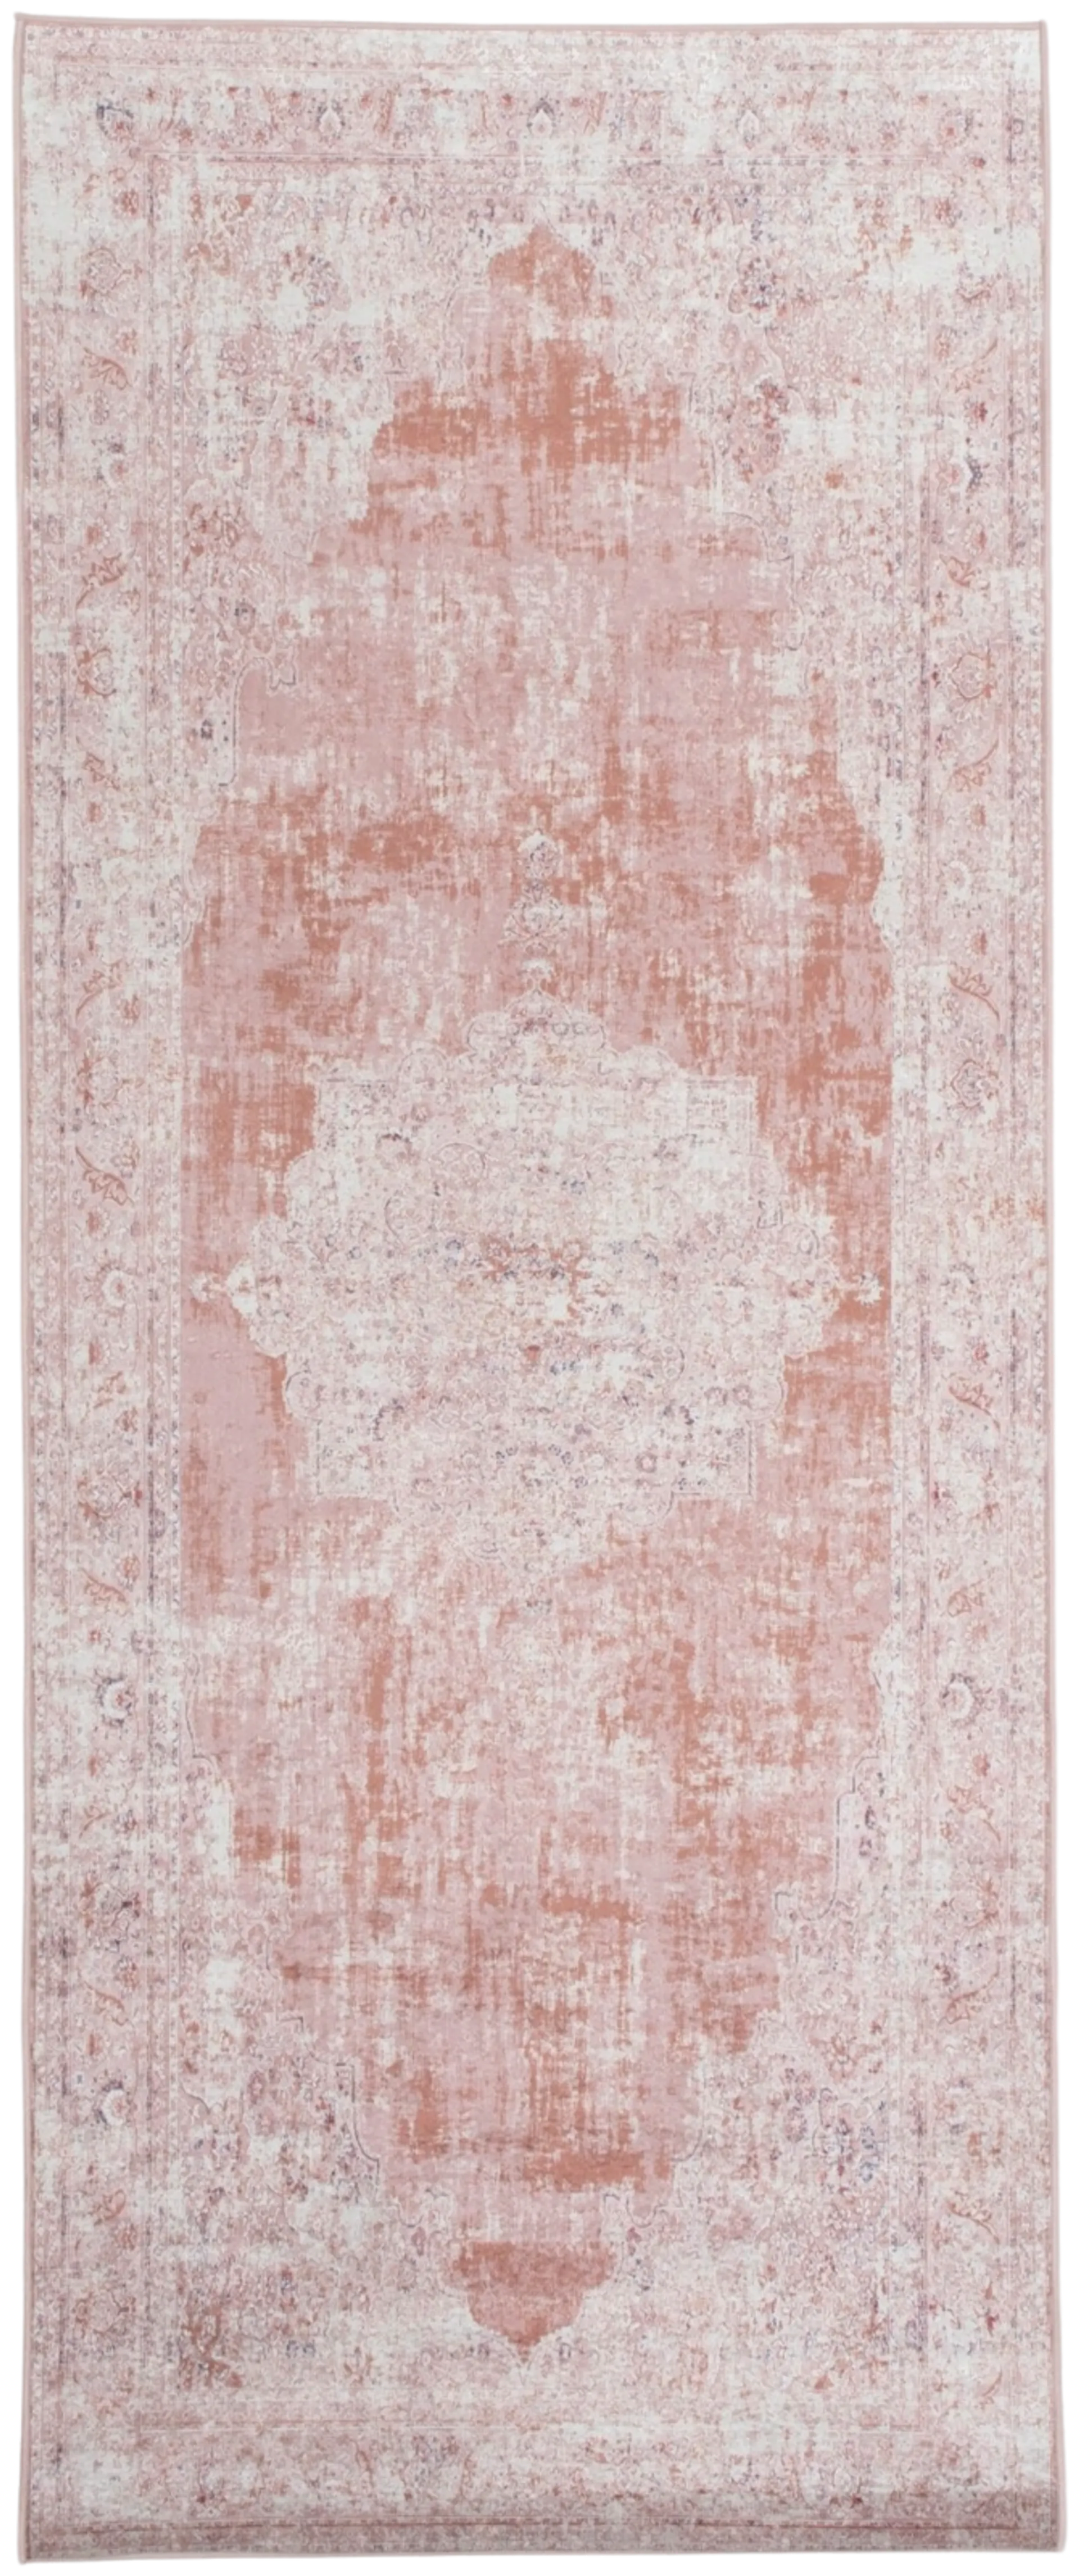 Vallila matto Topaasi 80x200 cm persikka - 1